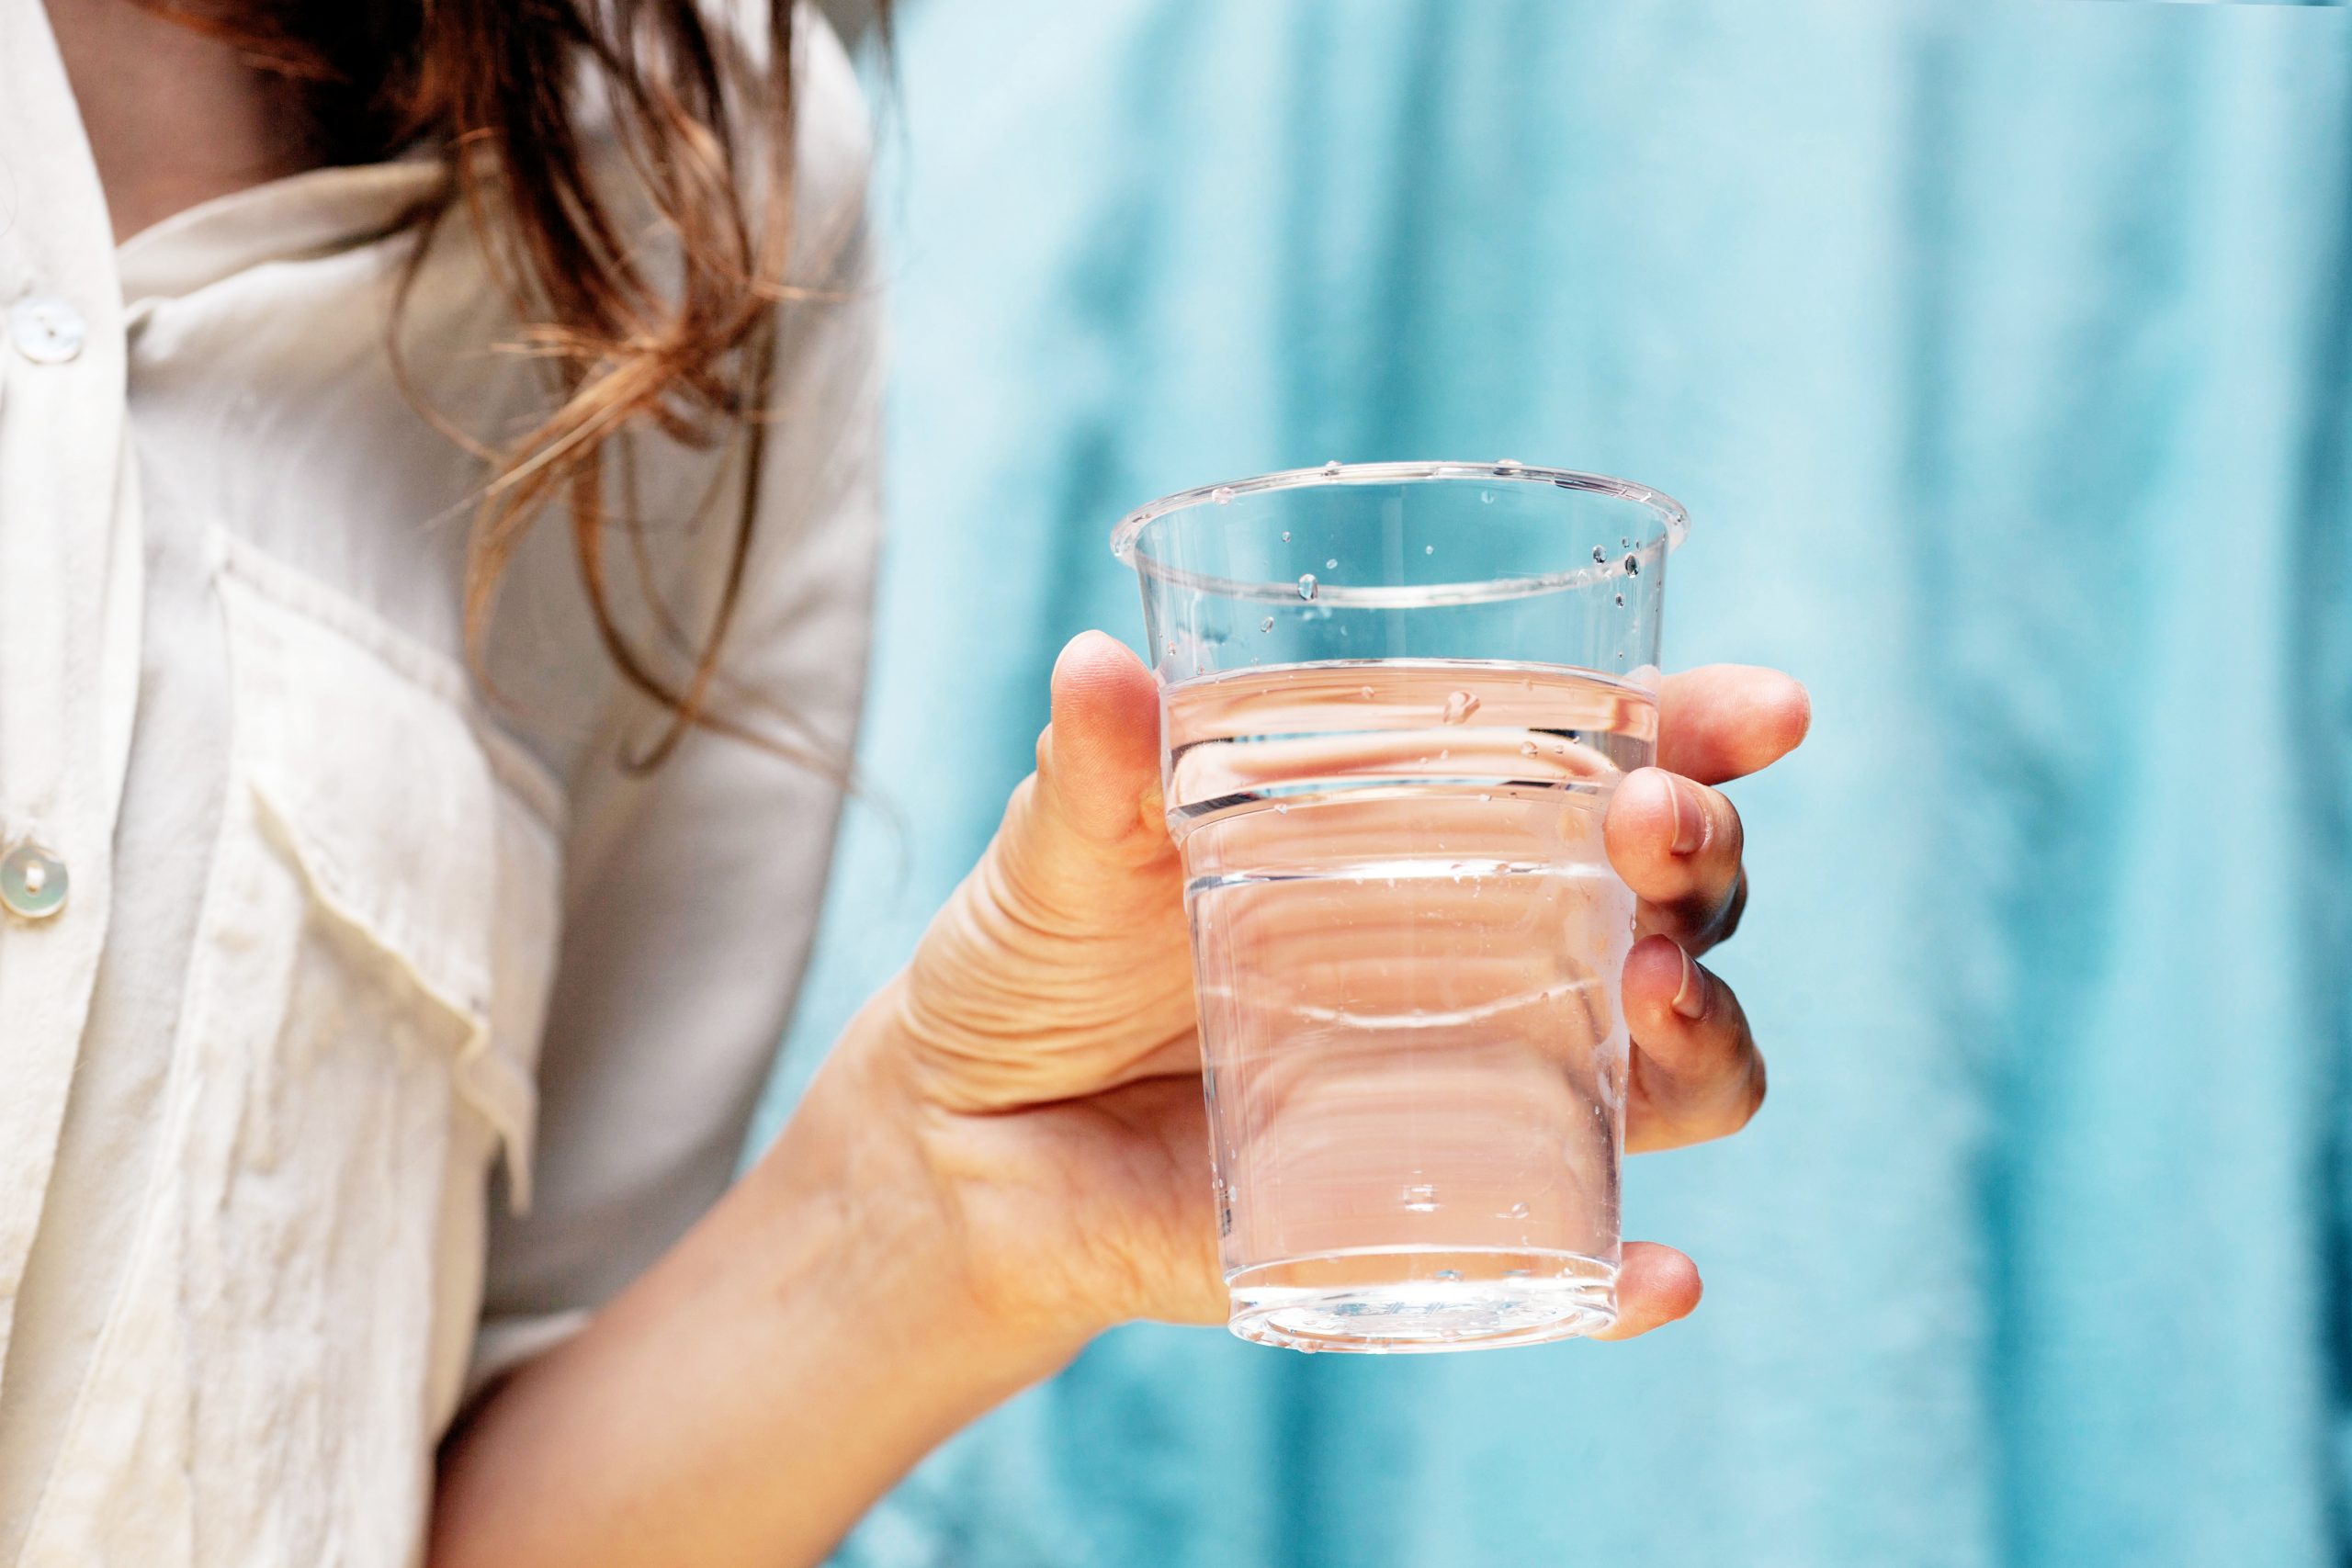 should you drink distilled water